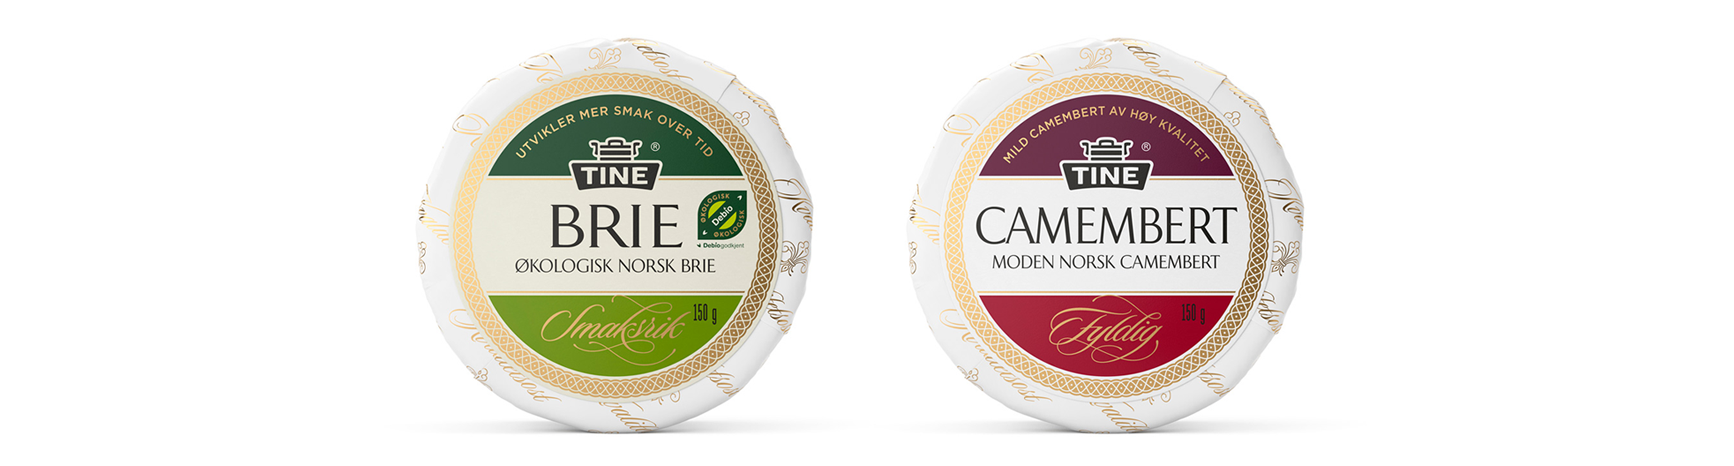 Tine OsteCompagniet Brie og Camembert. Emballasje packaging design.